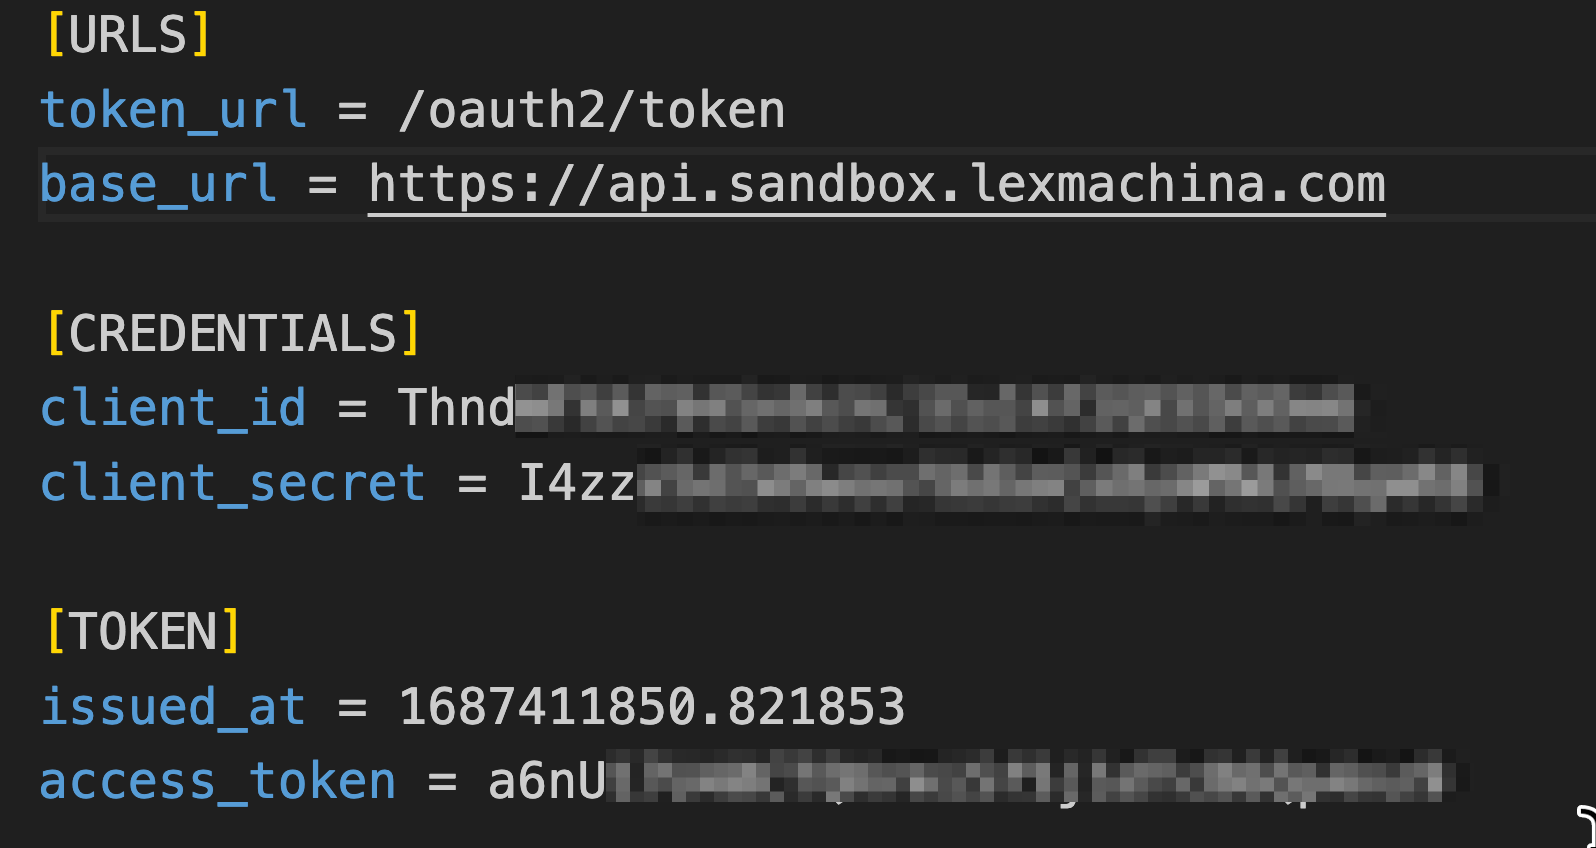 ini file showing base_url=https://api.sandbox.lexmachina.com